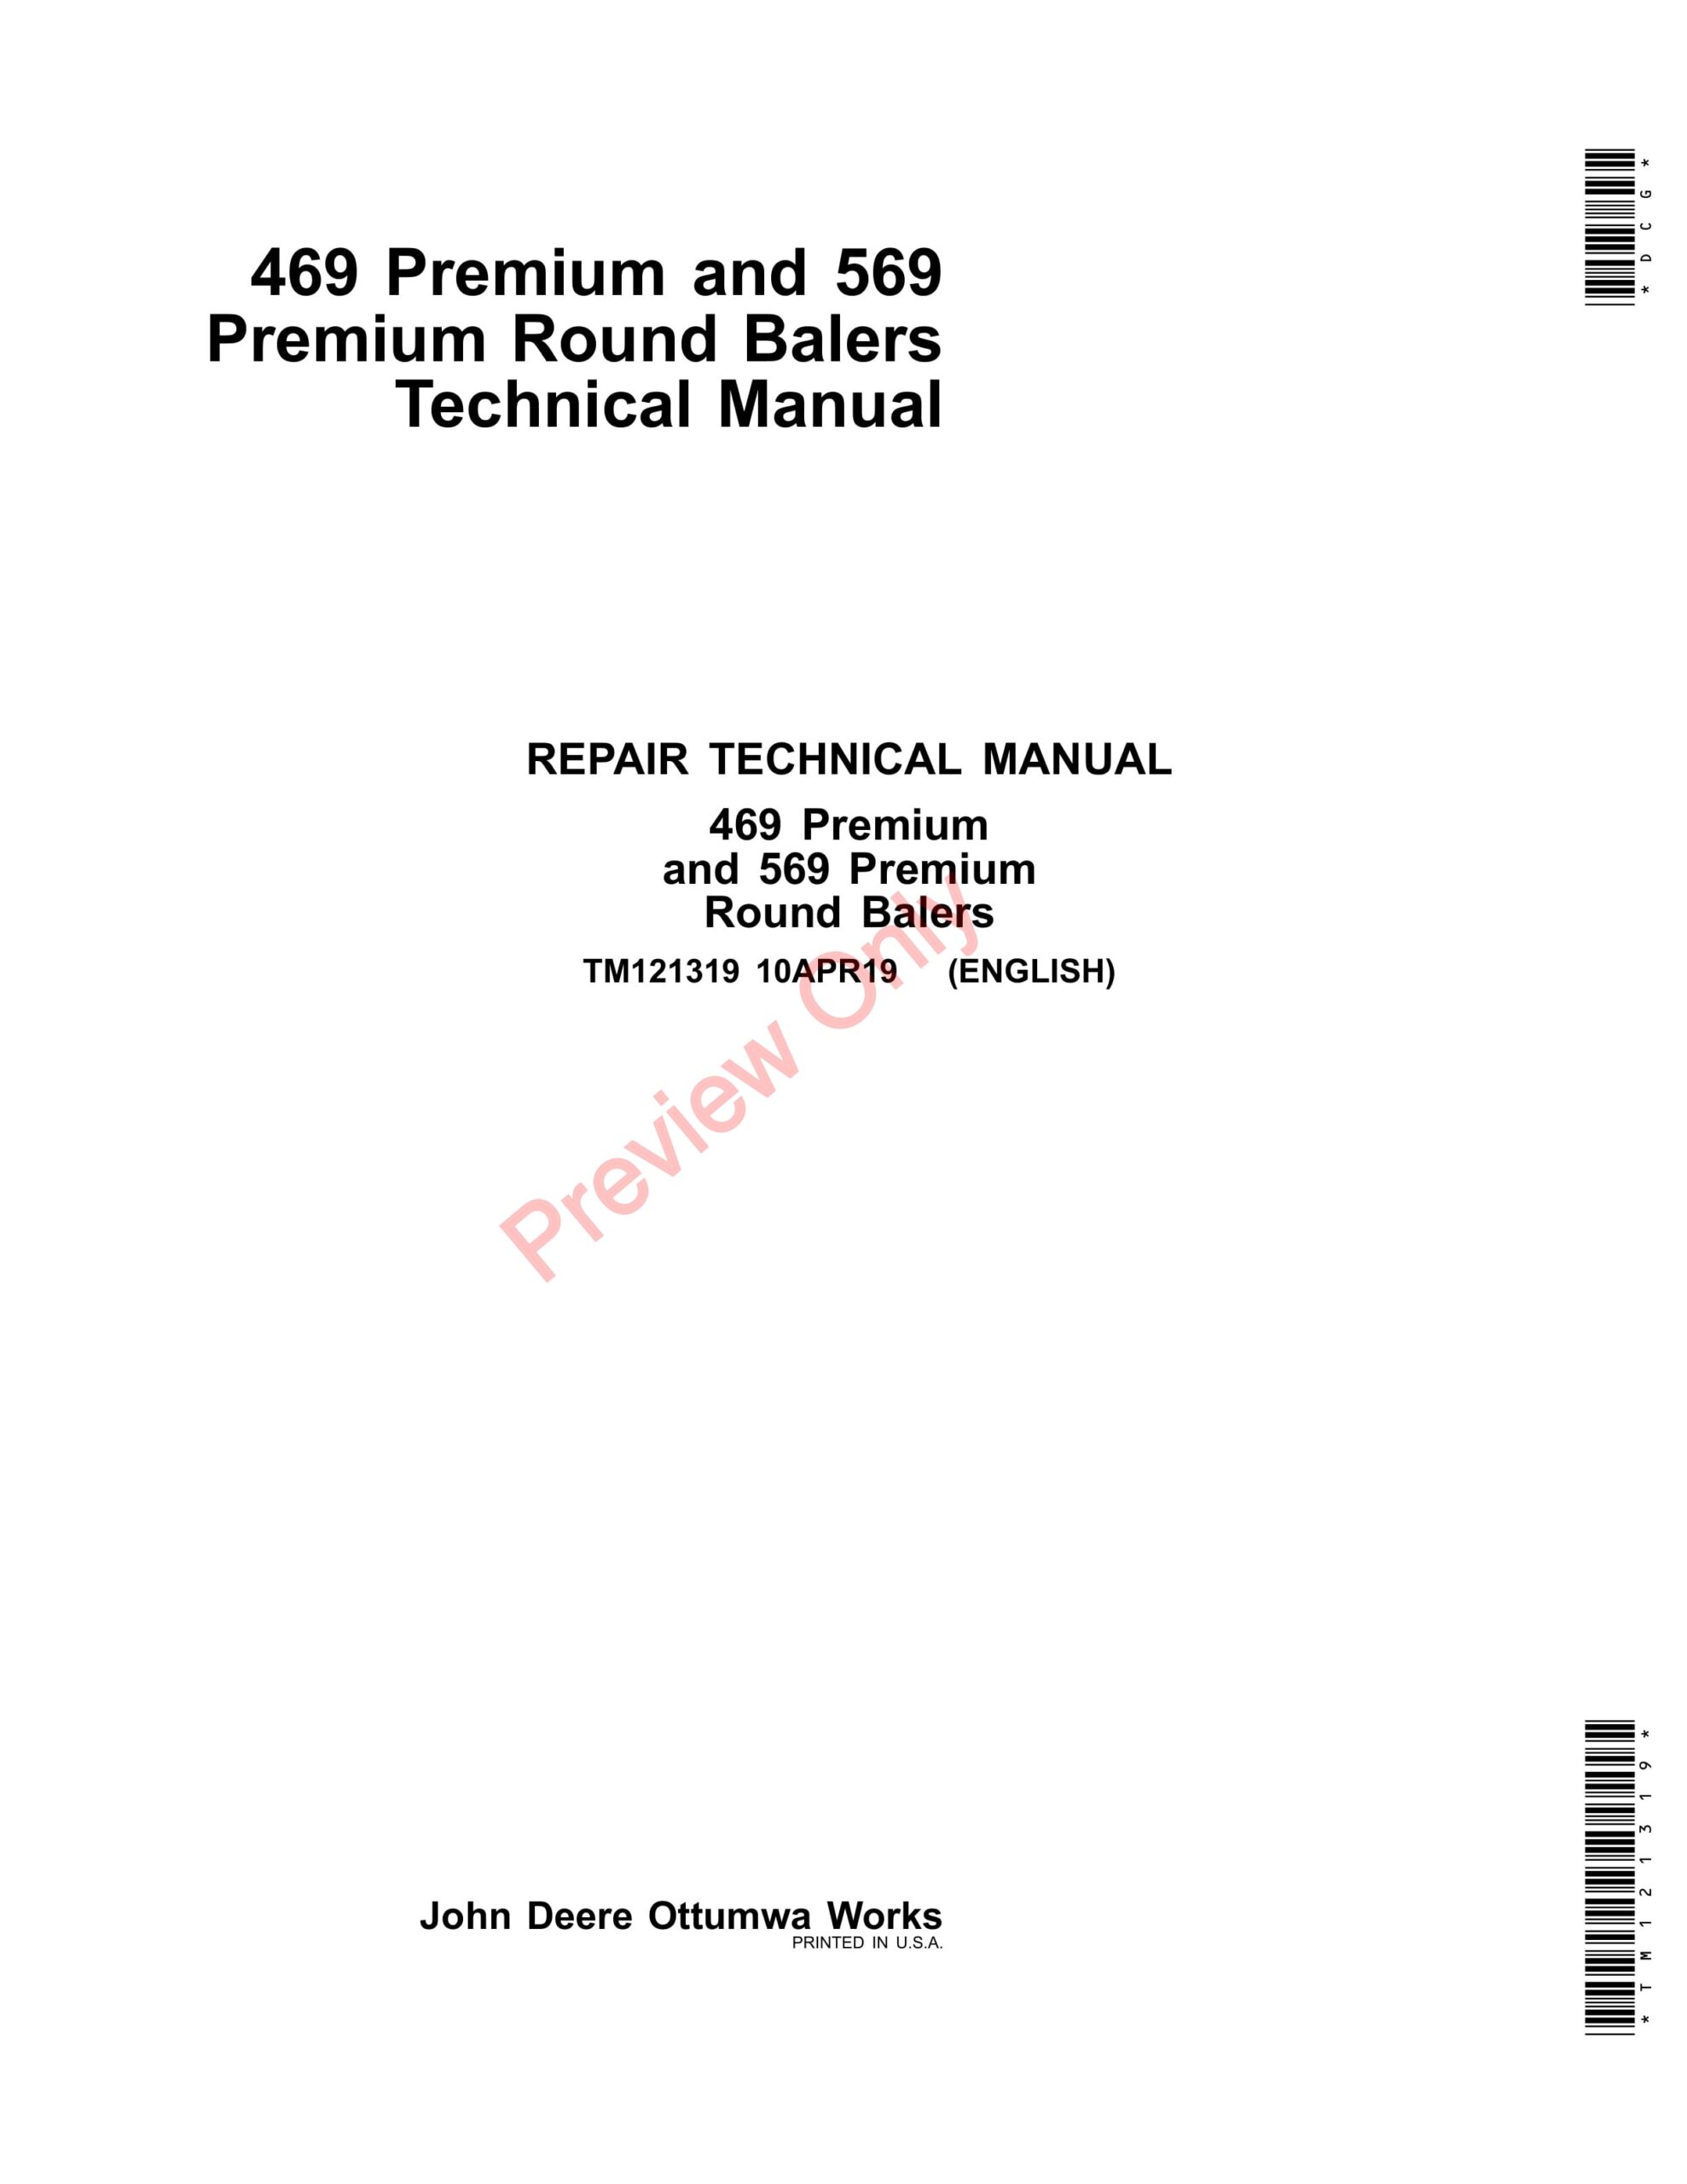 John Deere 469 Premium and 569 Premium Round Balers Technical Manual TM121319 10APR19-1